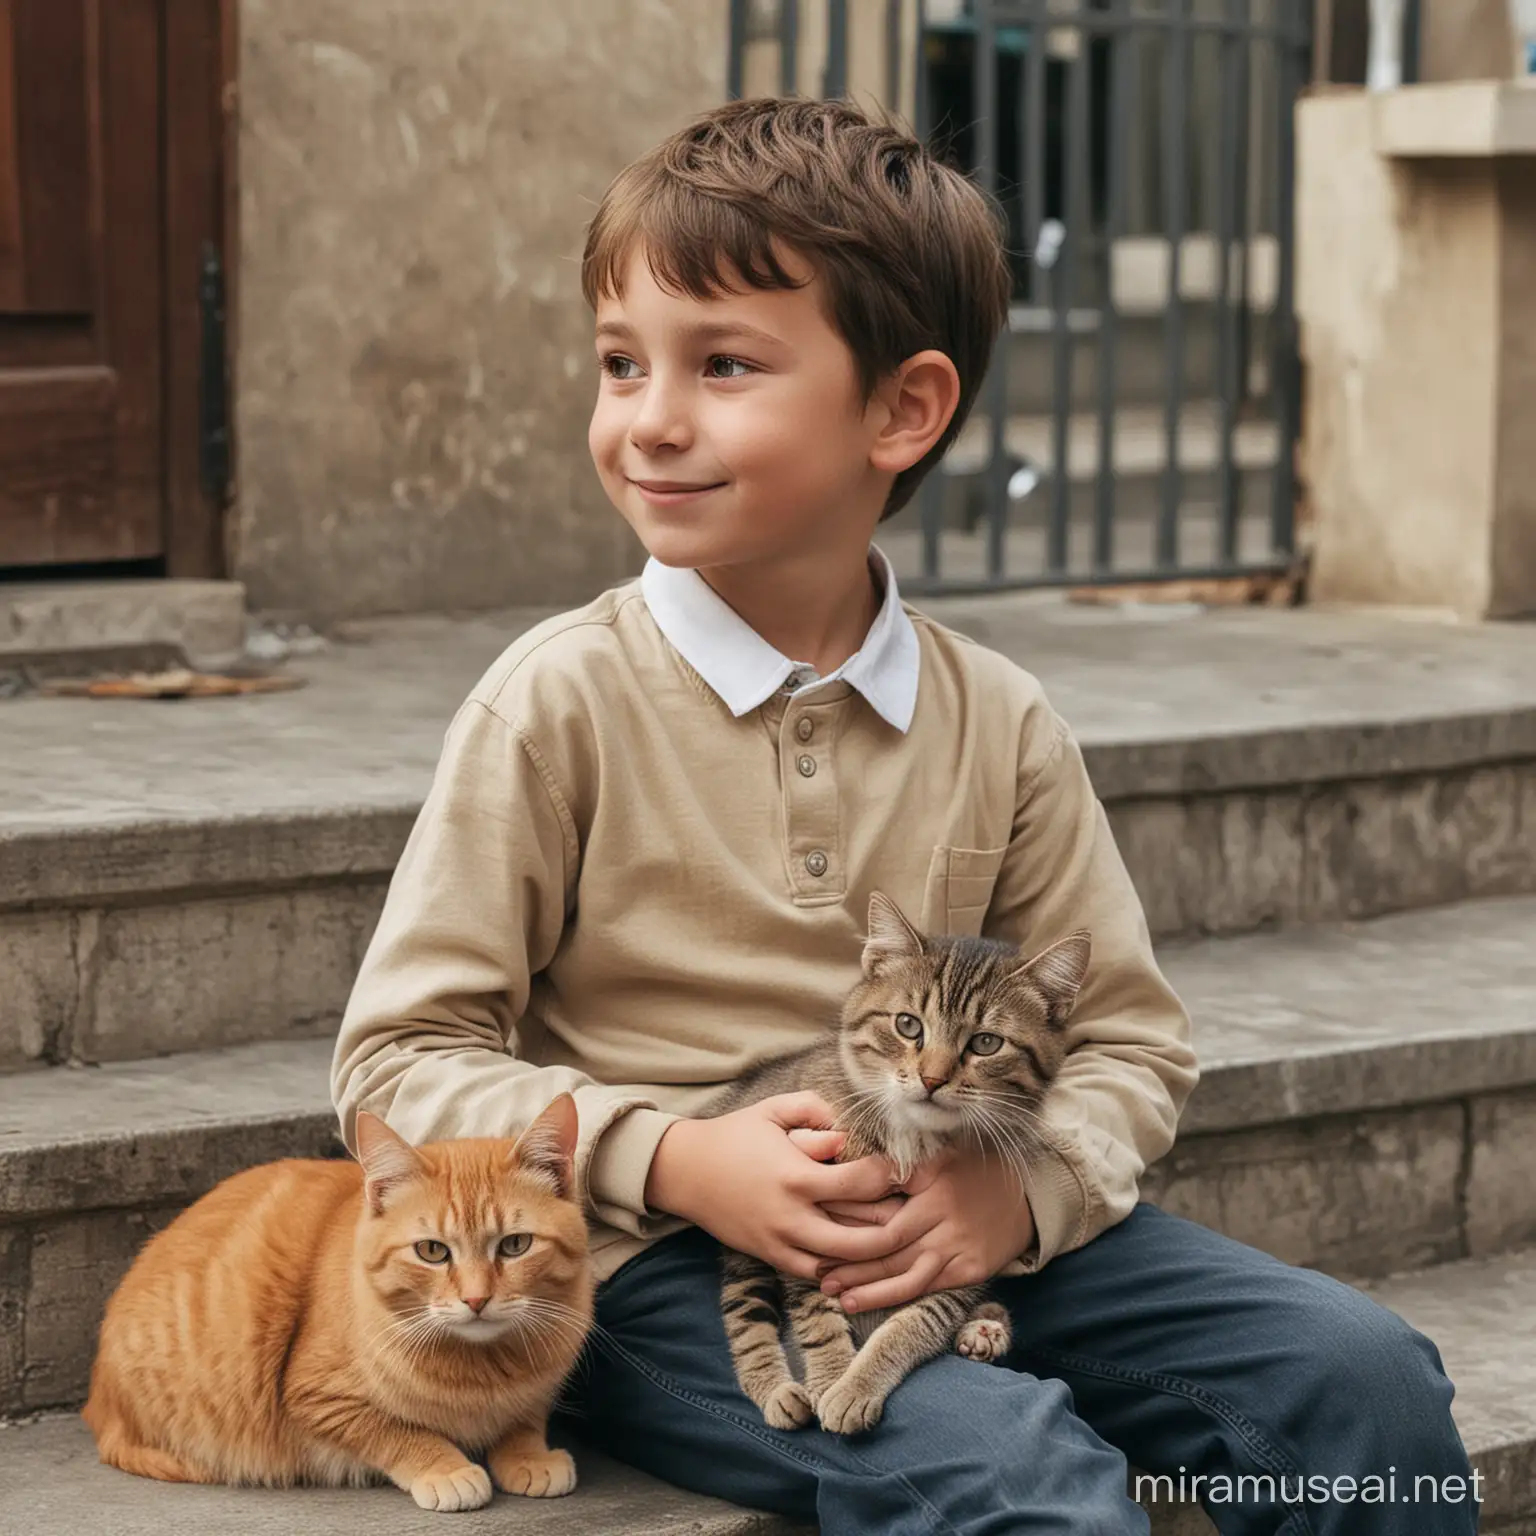 a boy sitting with cat.